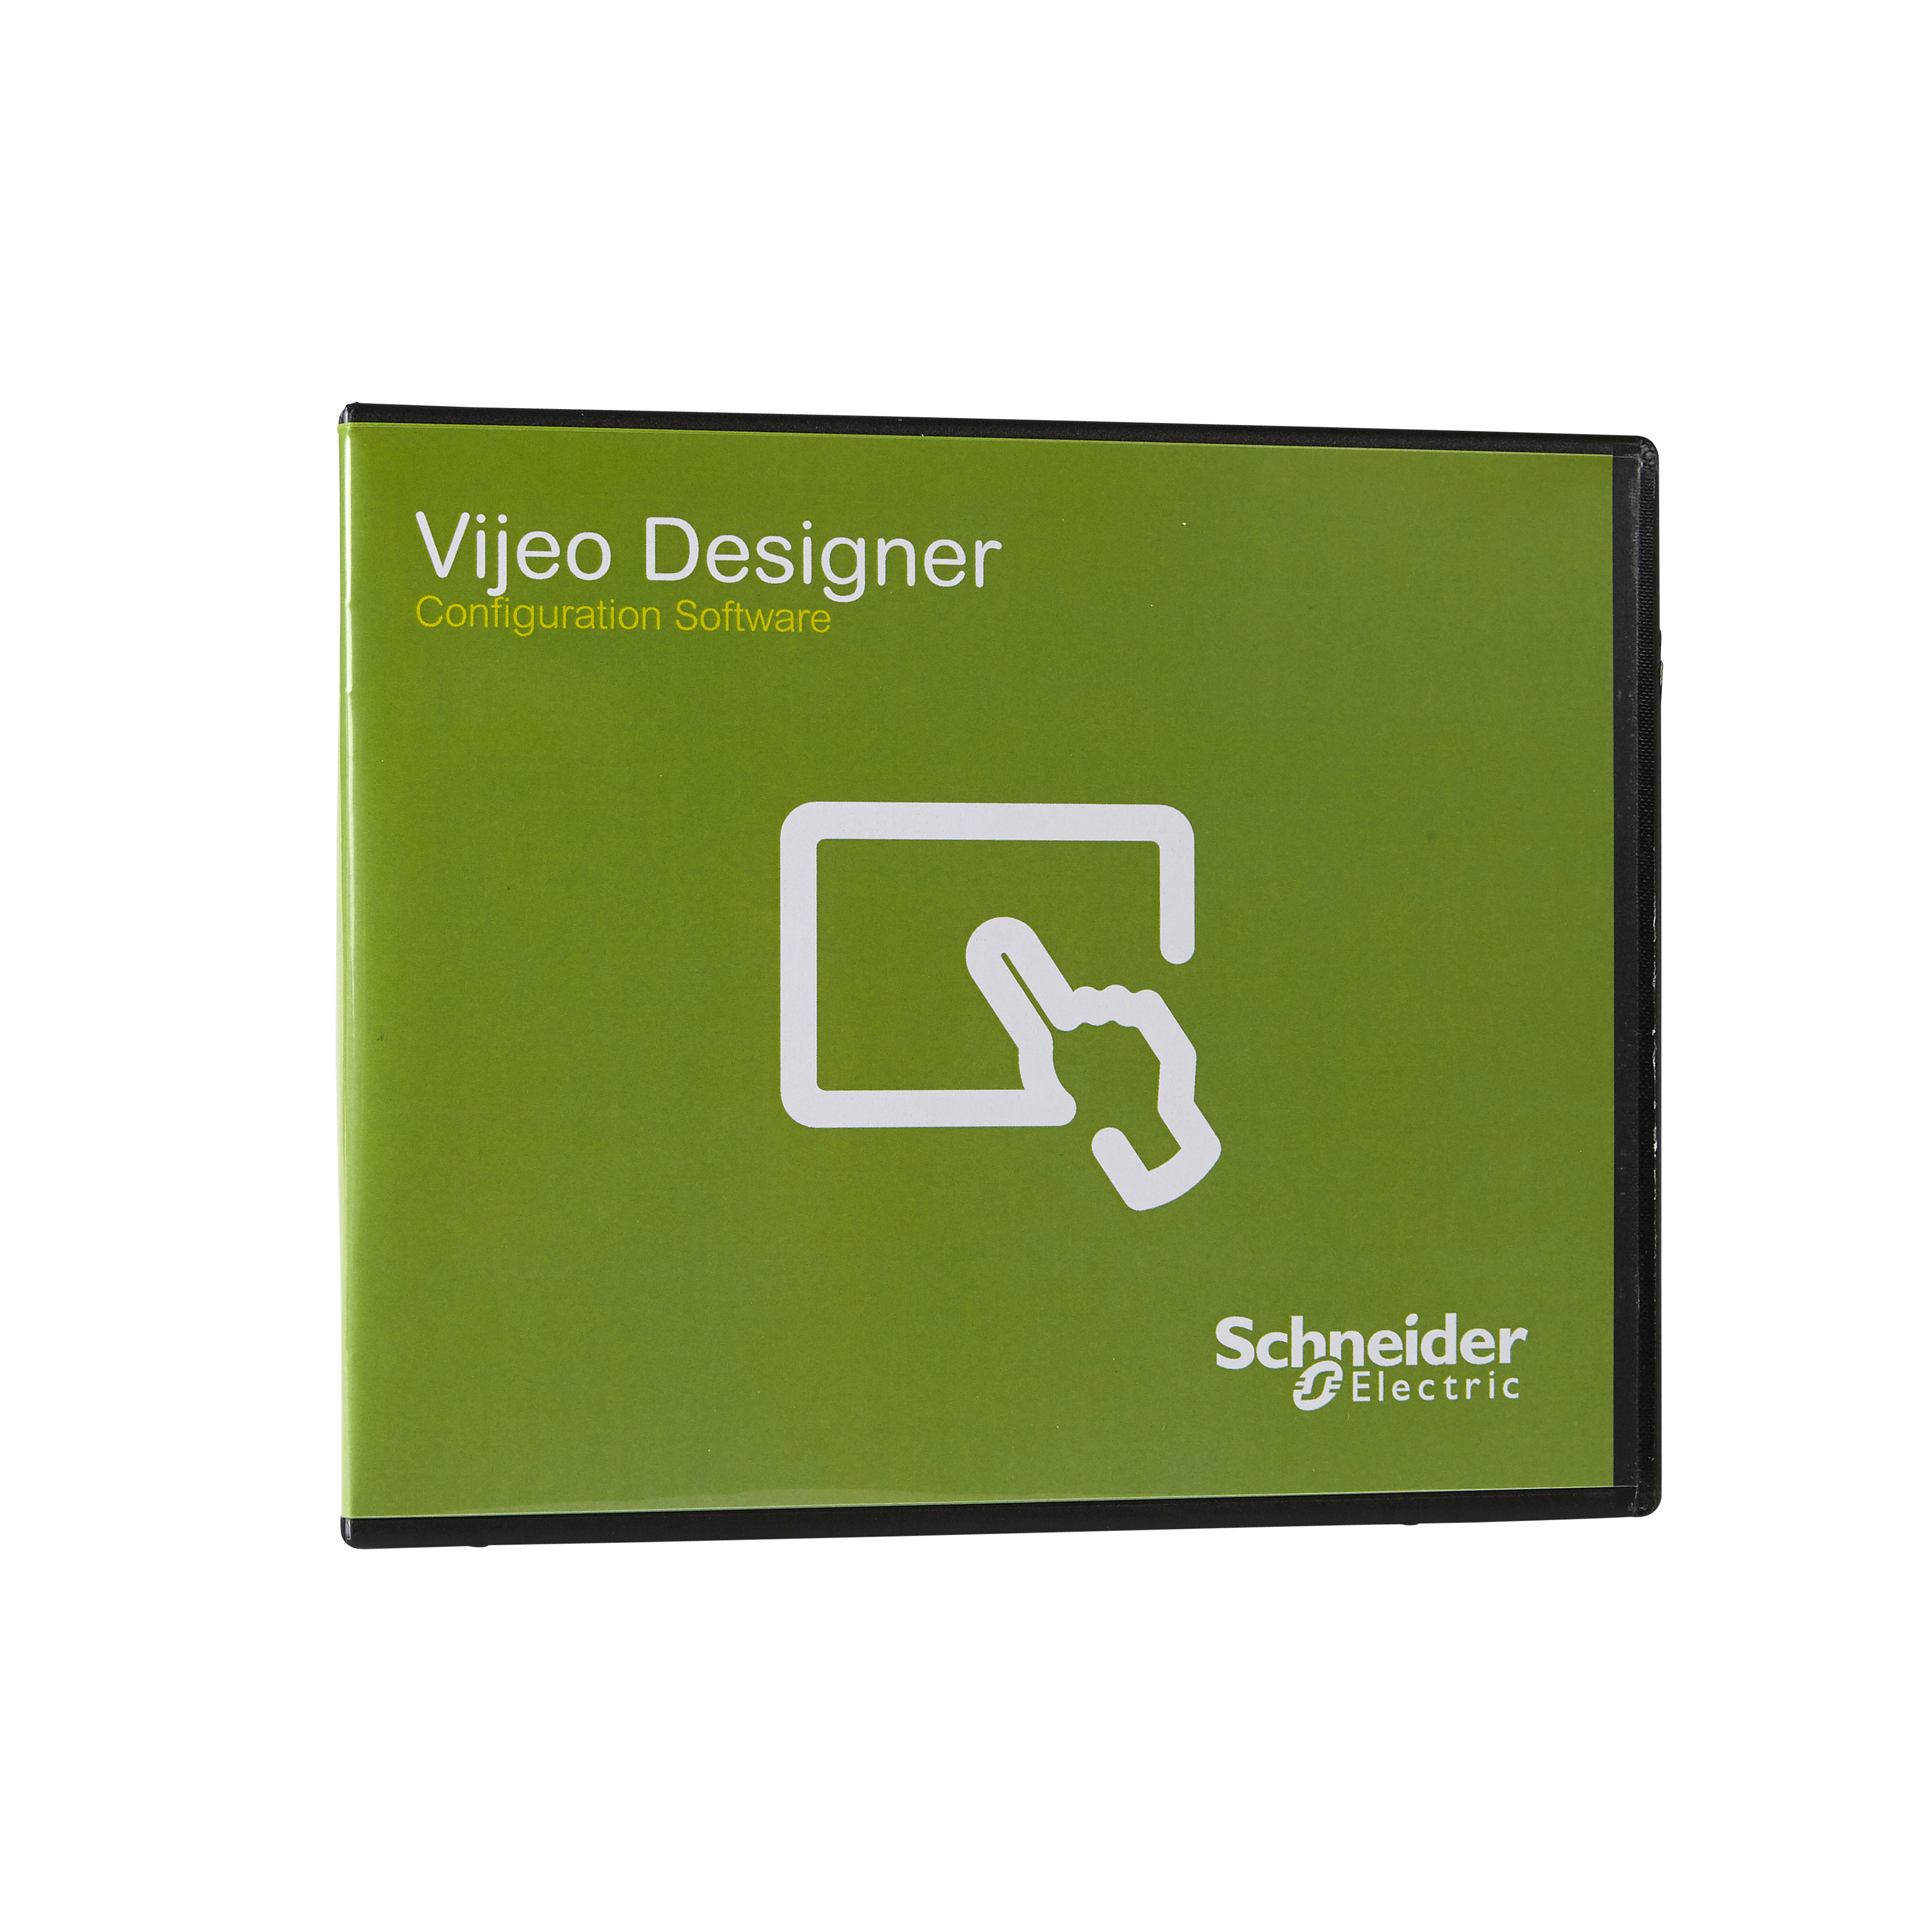 Vijeo Designer 6.2, HMI configuration software group license